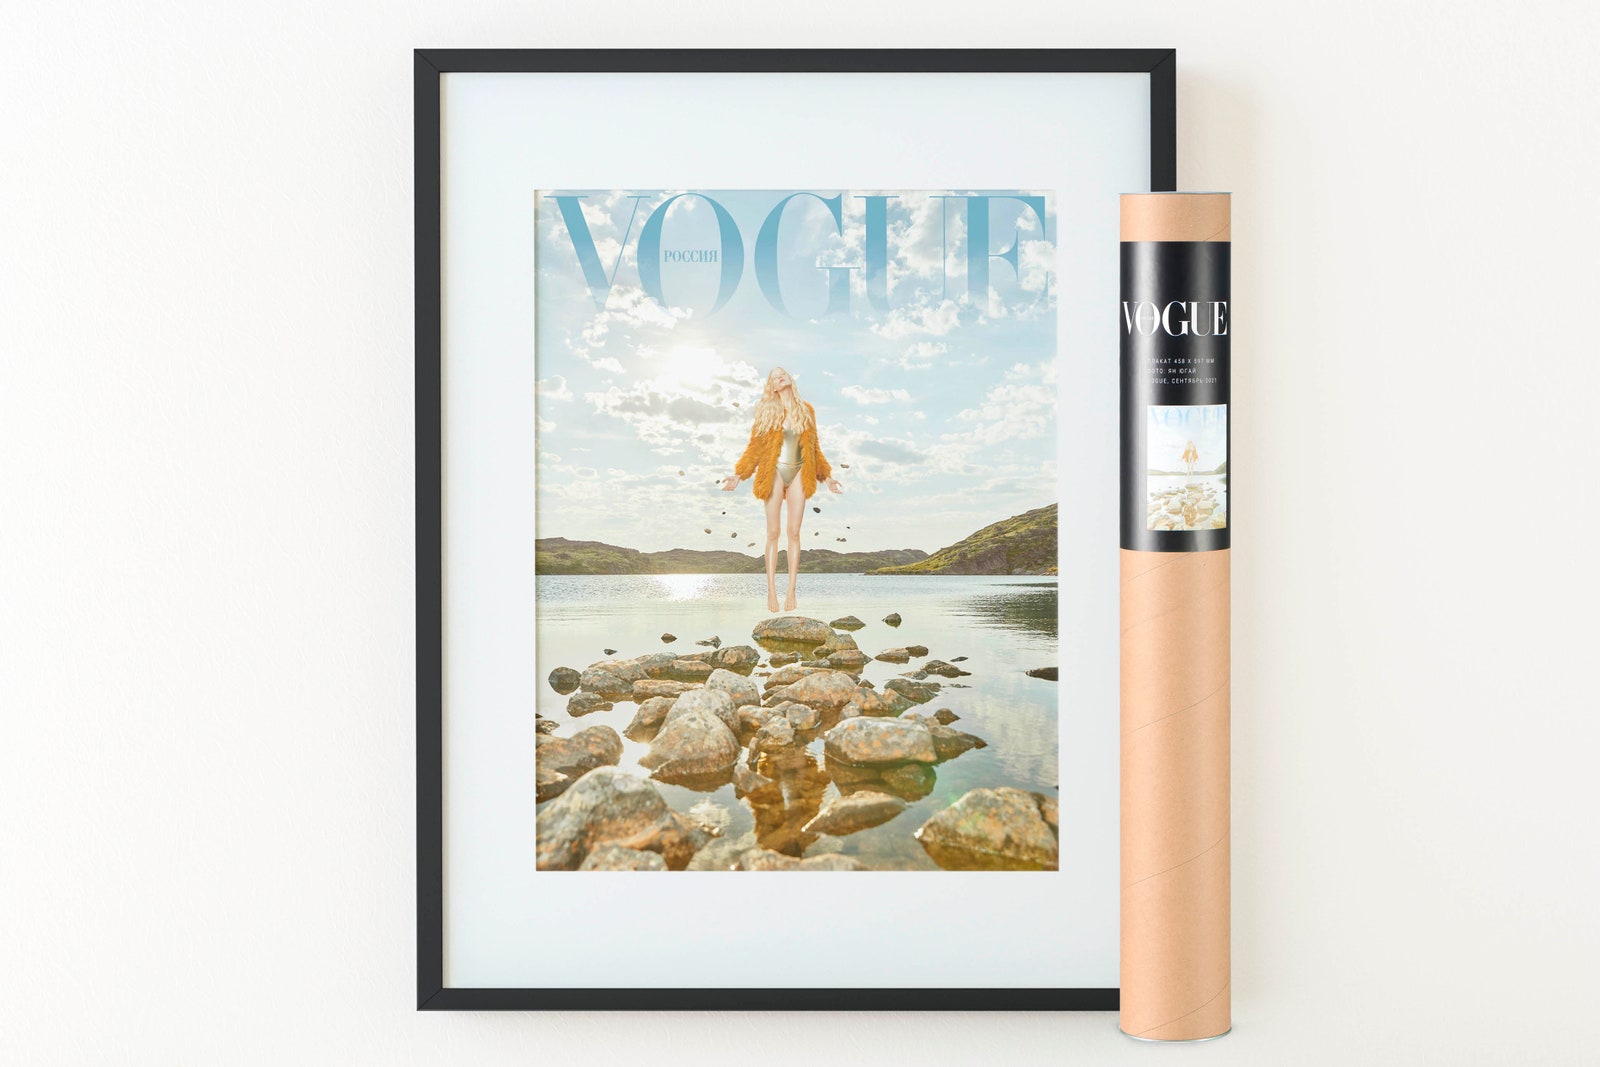 Постер Vogue 2000 рублей сondenaststore.ru